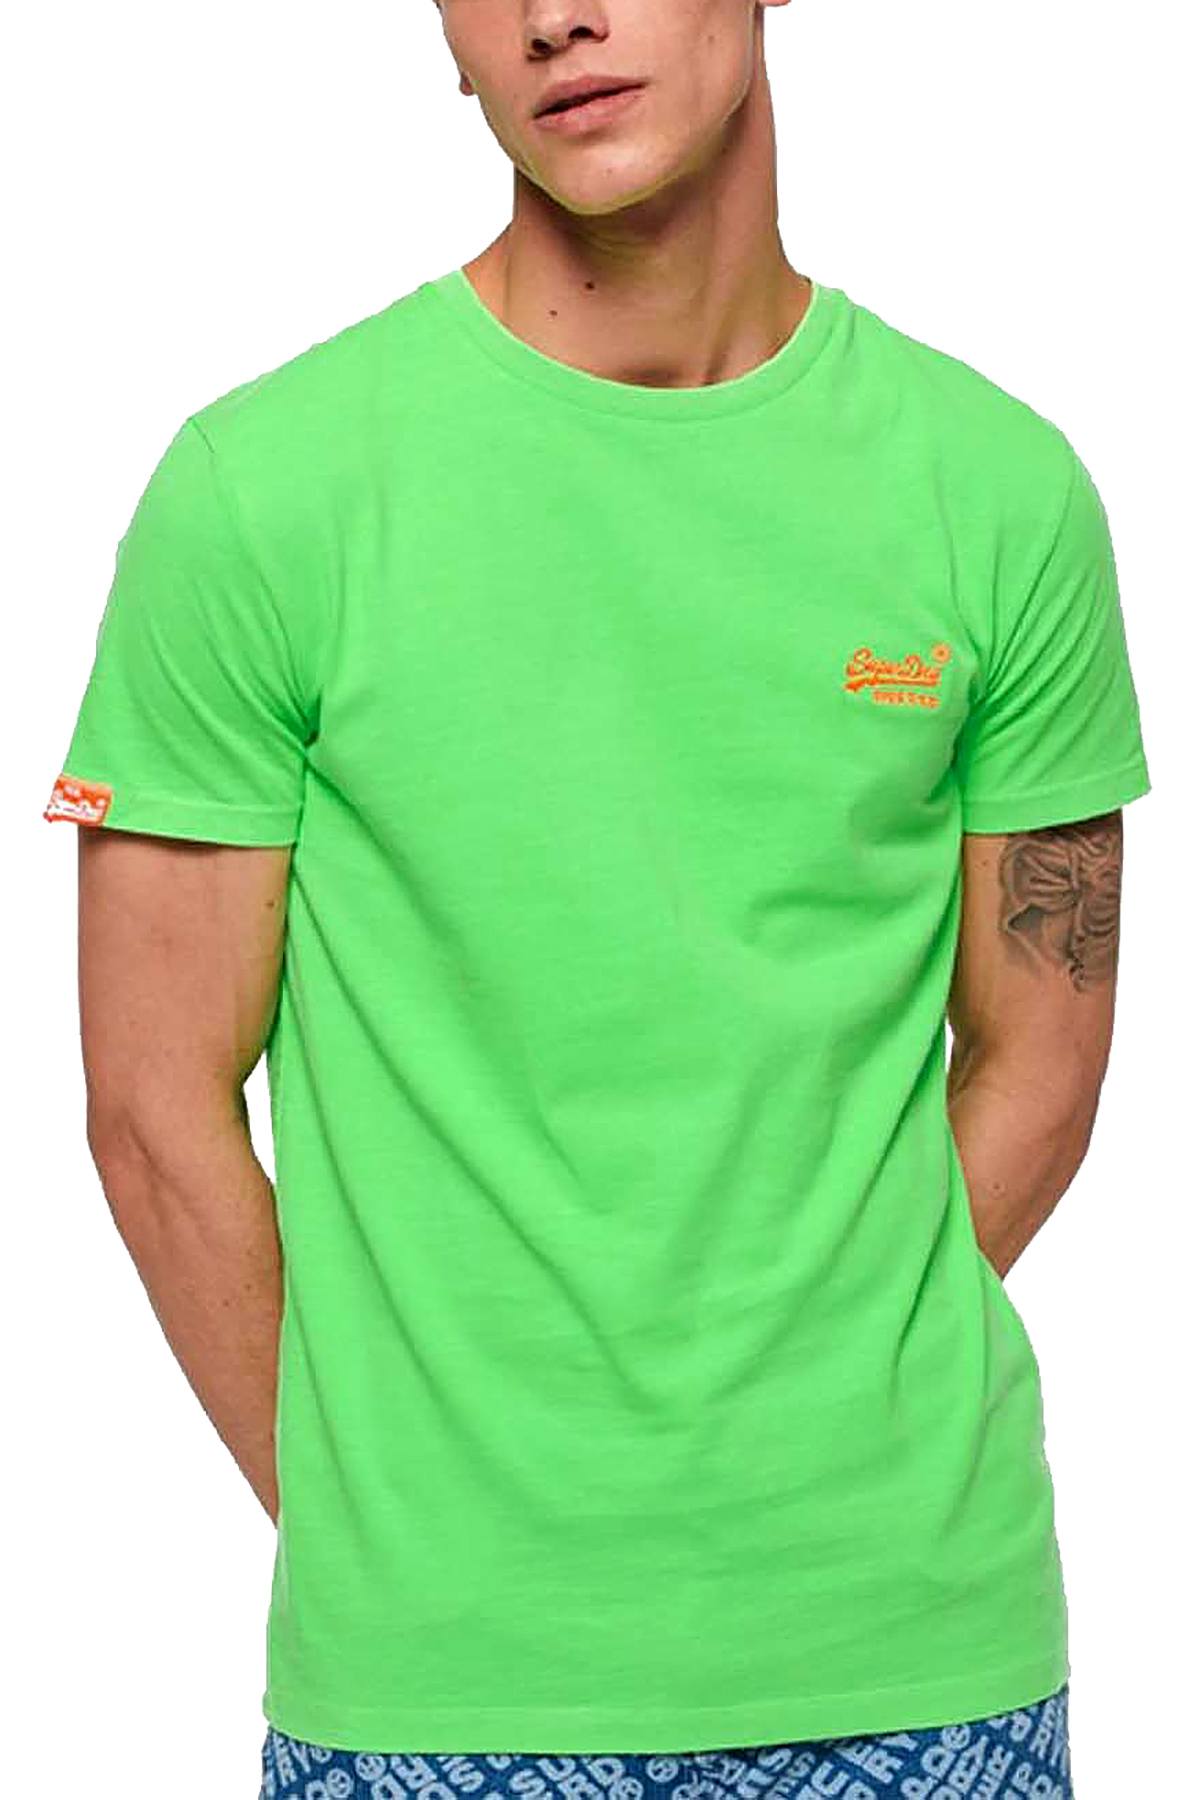 SuperDry Ice-Green Orange-Label Neon Tee